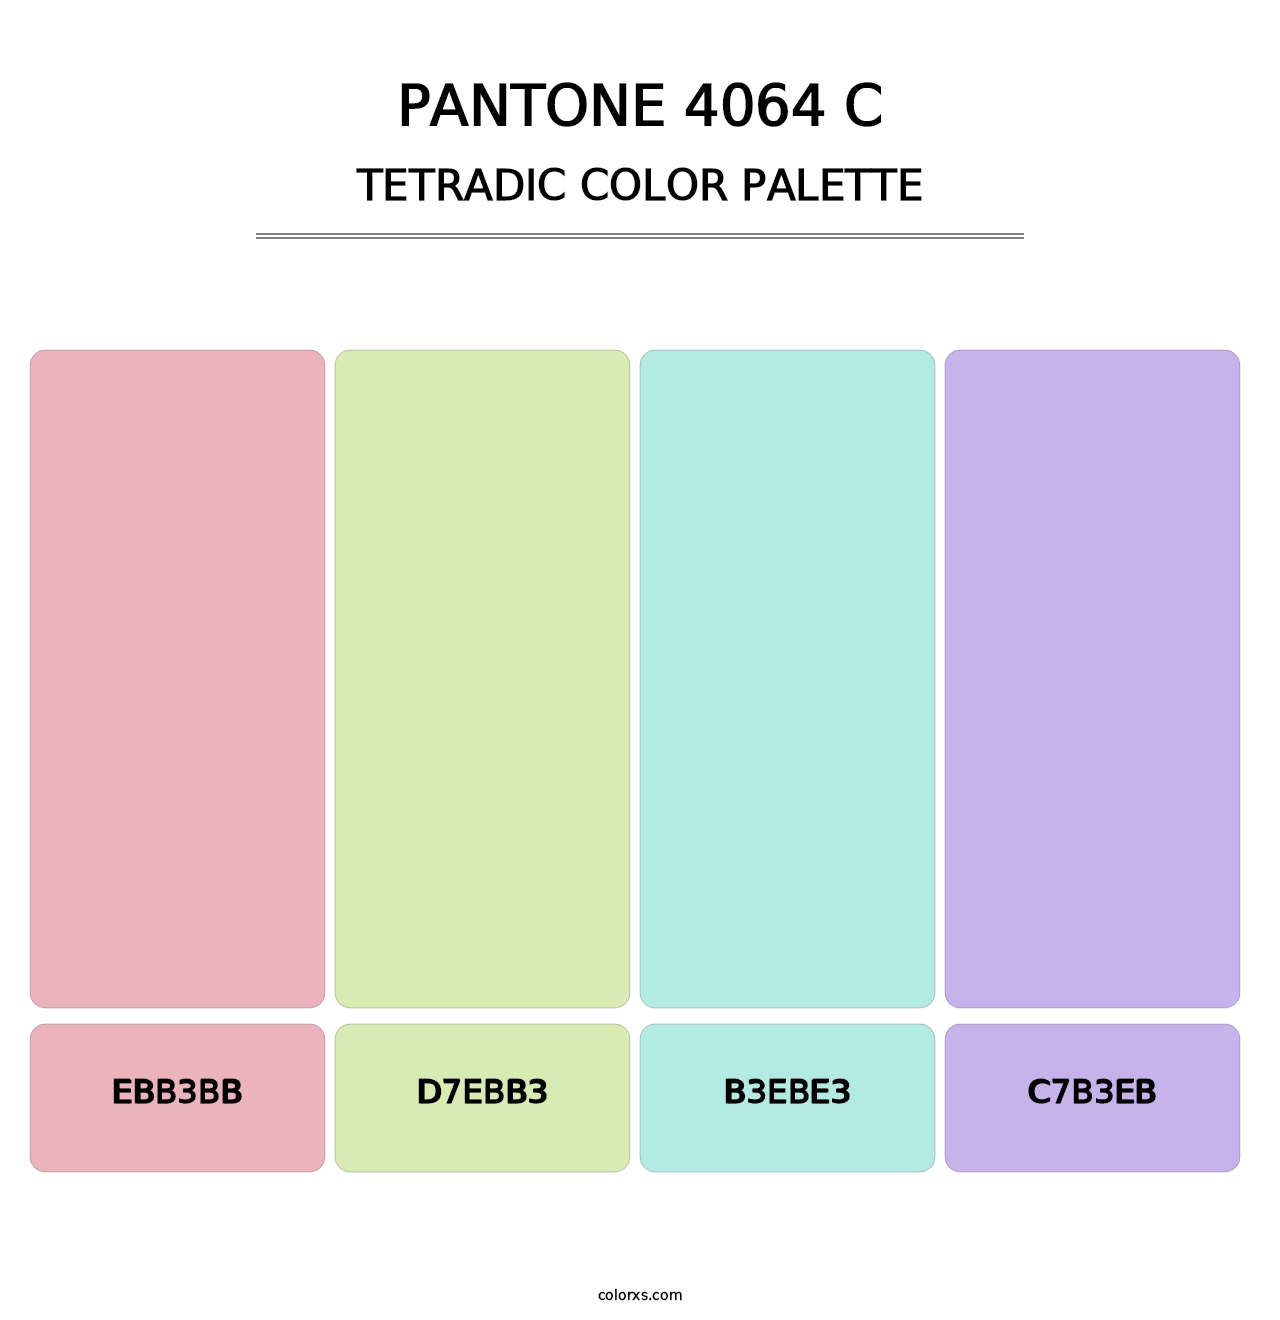 PANTONE 4064 C - Tetradic Color Palette